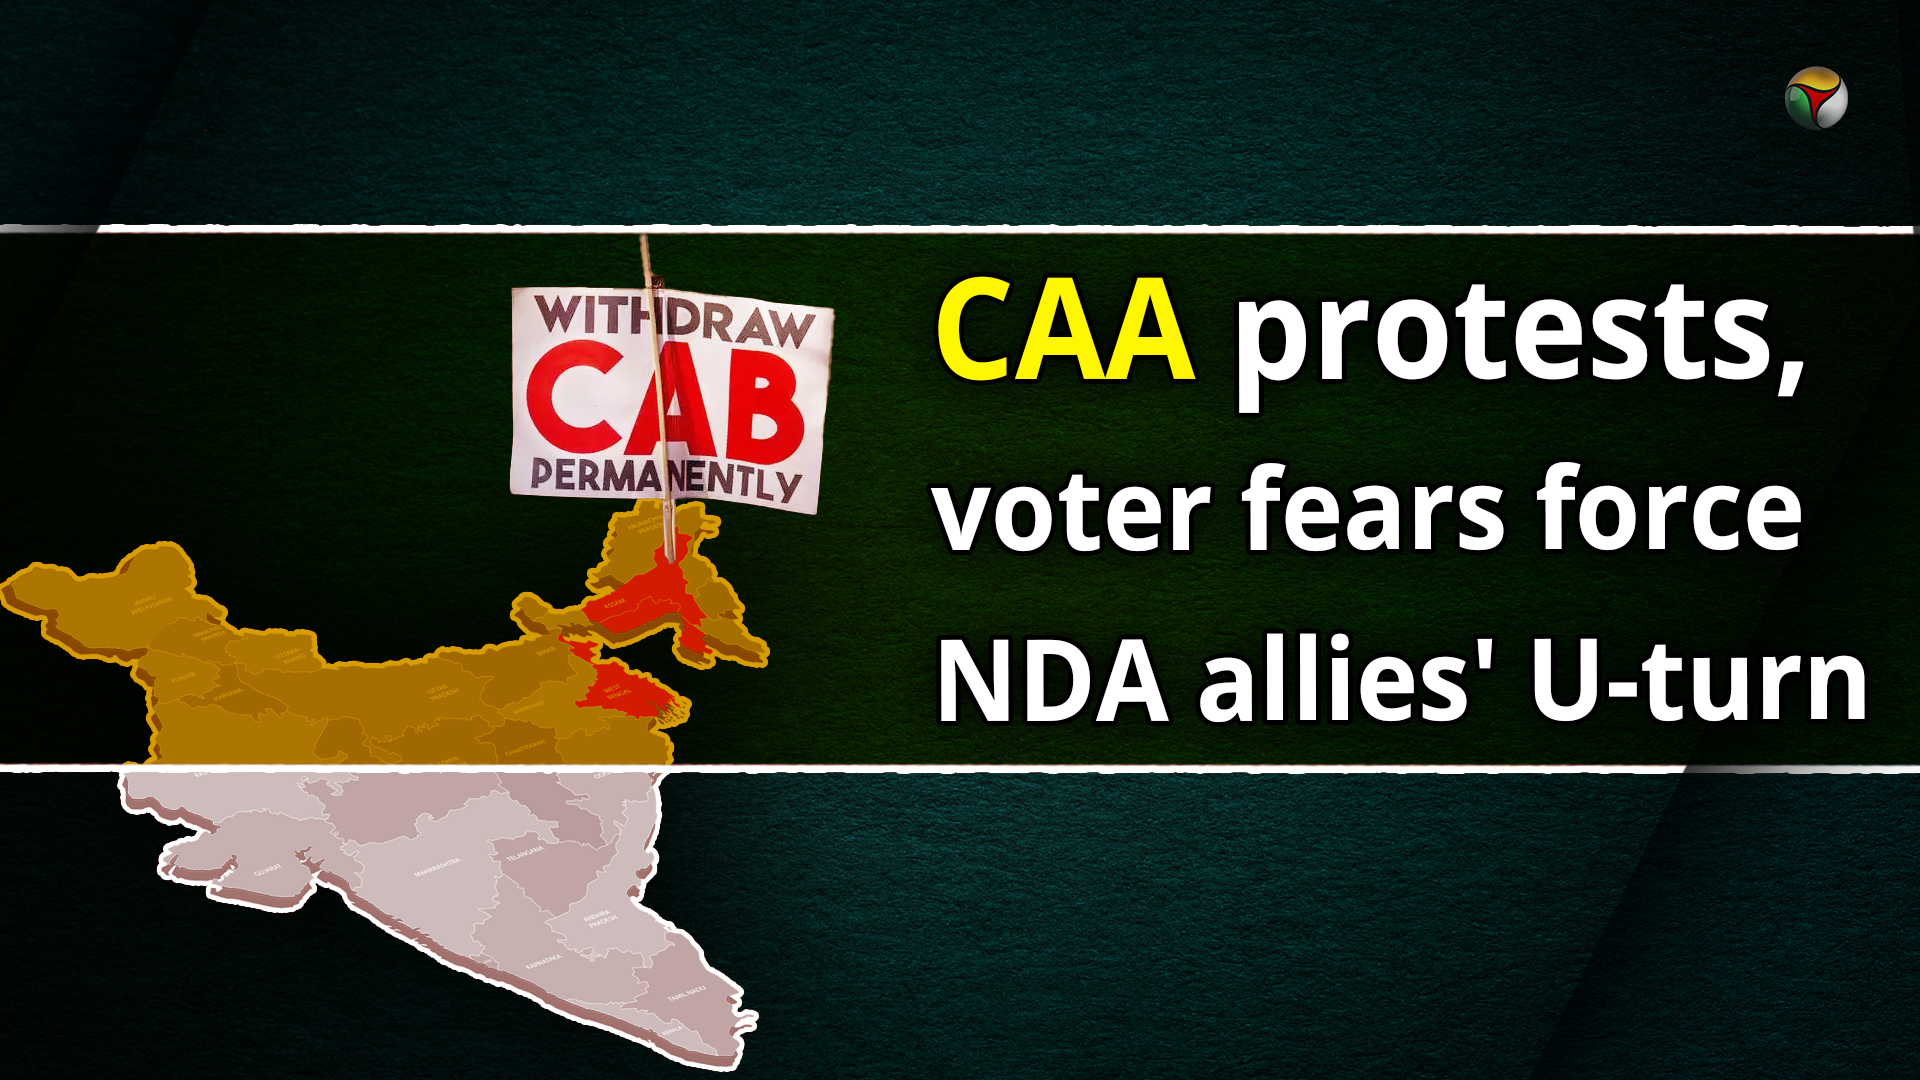 CAA protests, voter fears force NDA allies U-turn